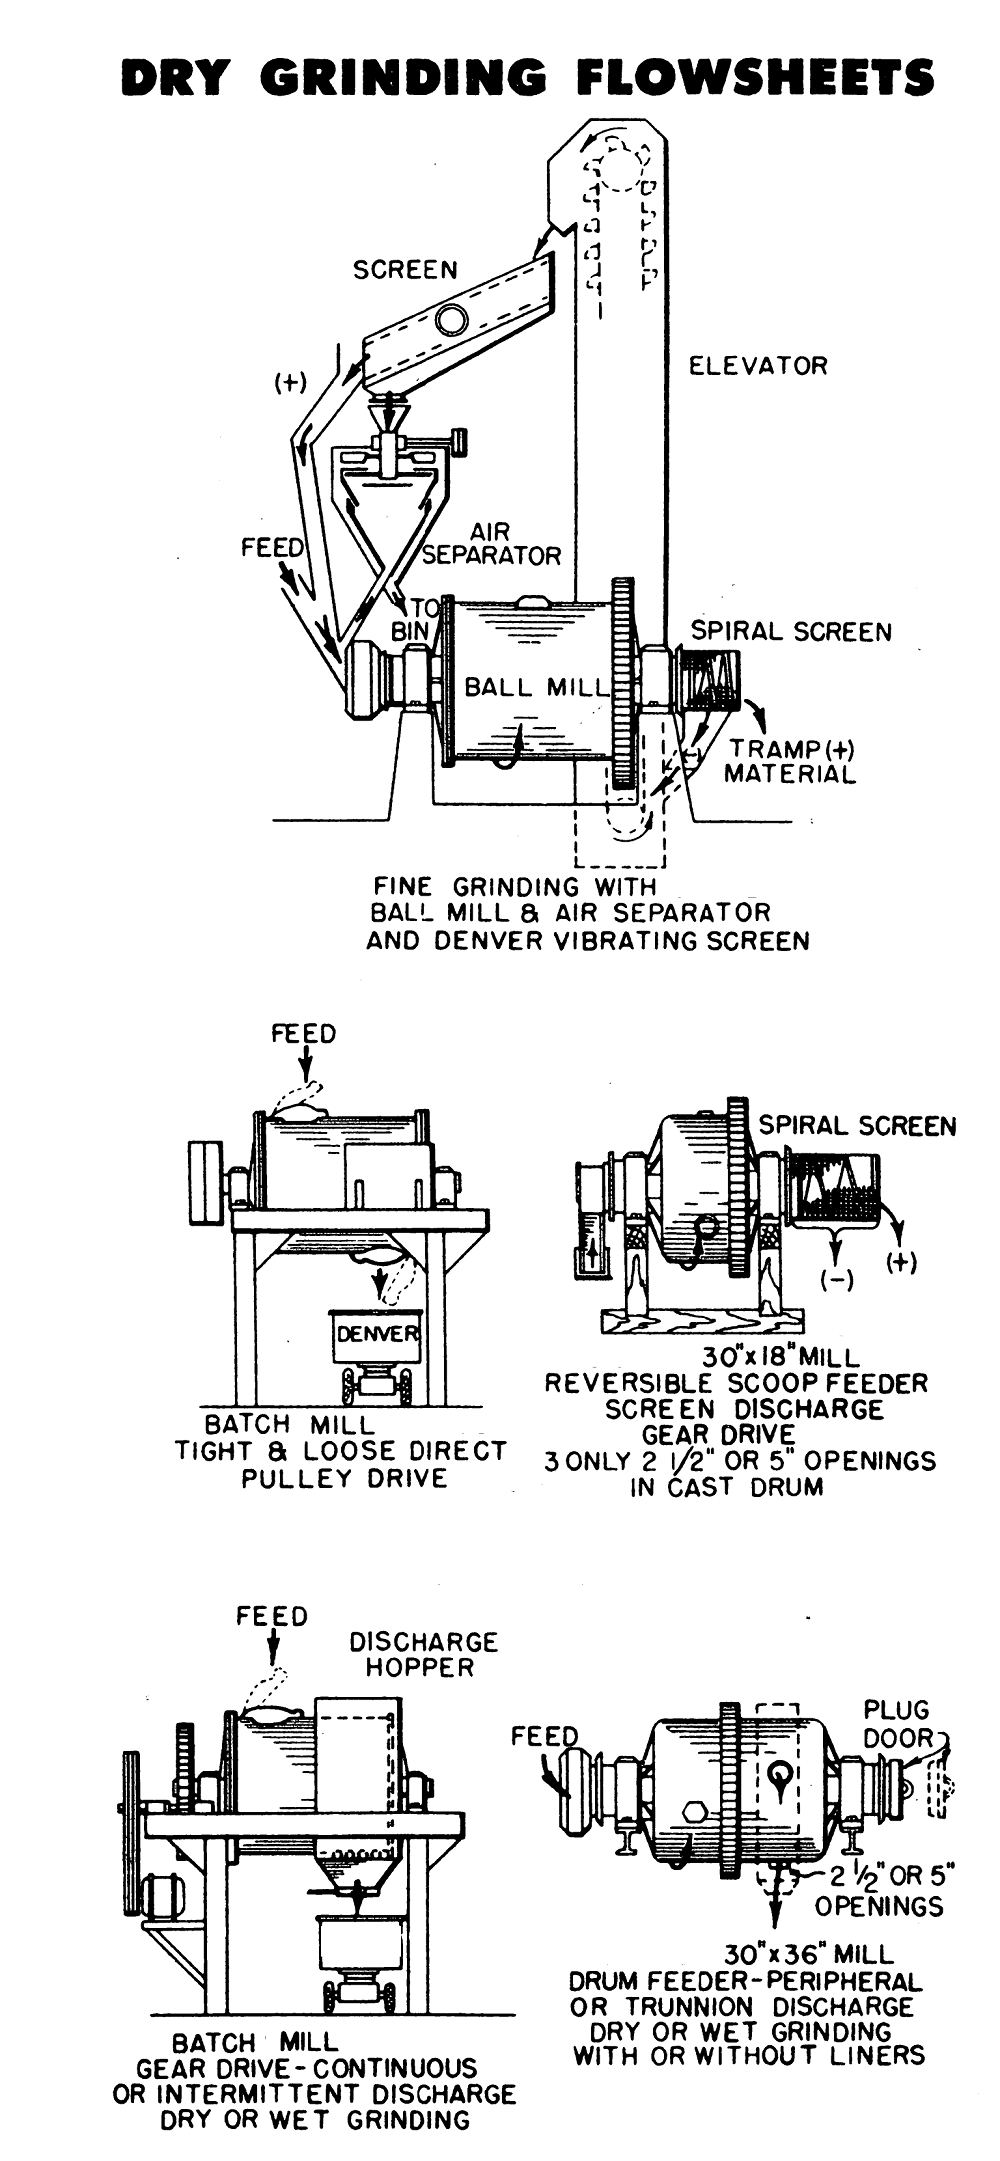 dry grinding equipment